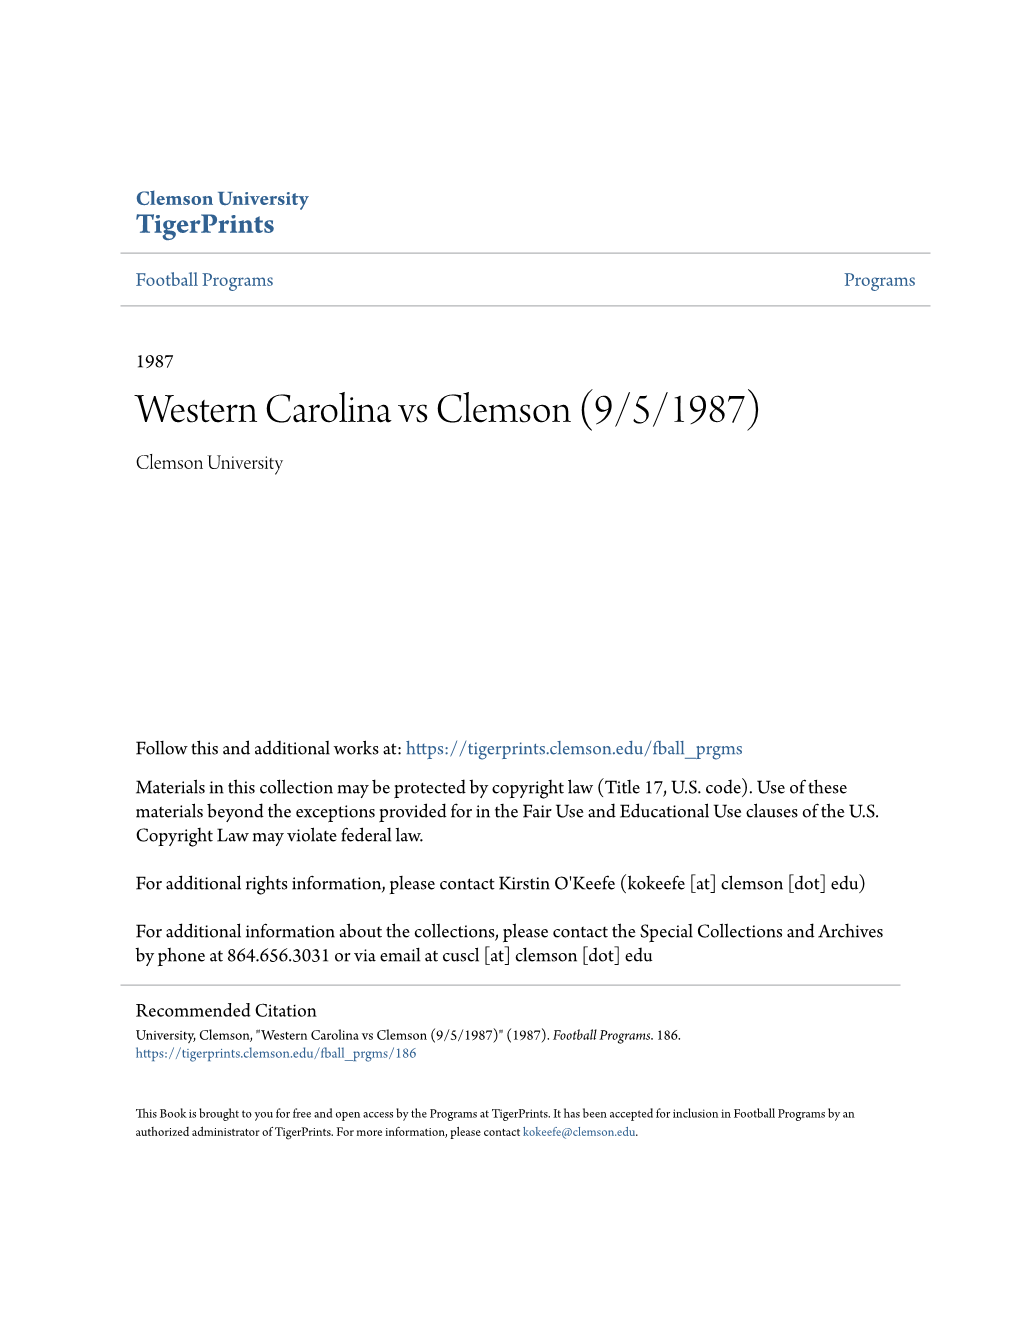 Western Carolina Vs Clemson (9/5/1987) Clemson University